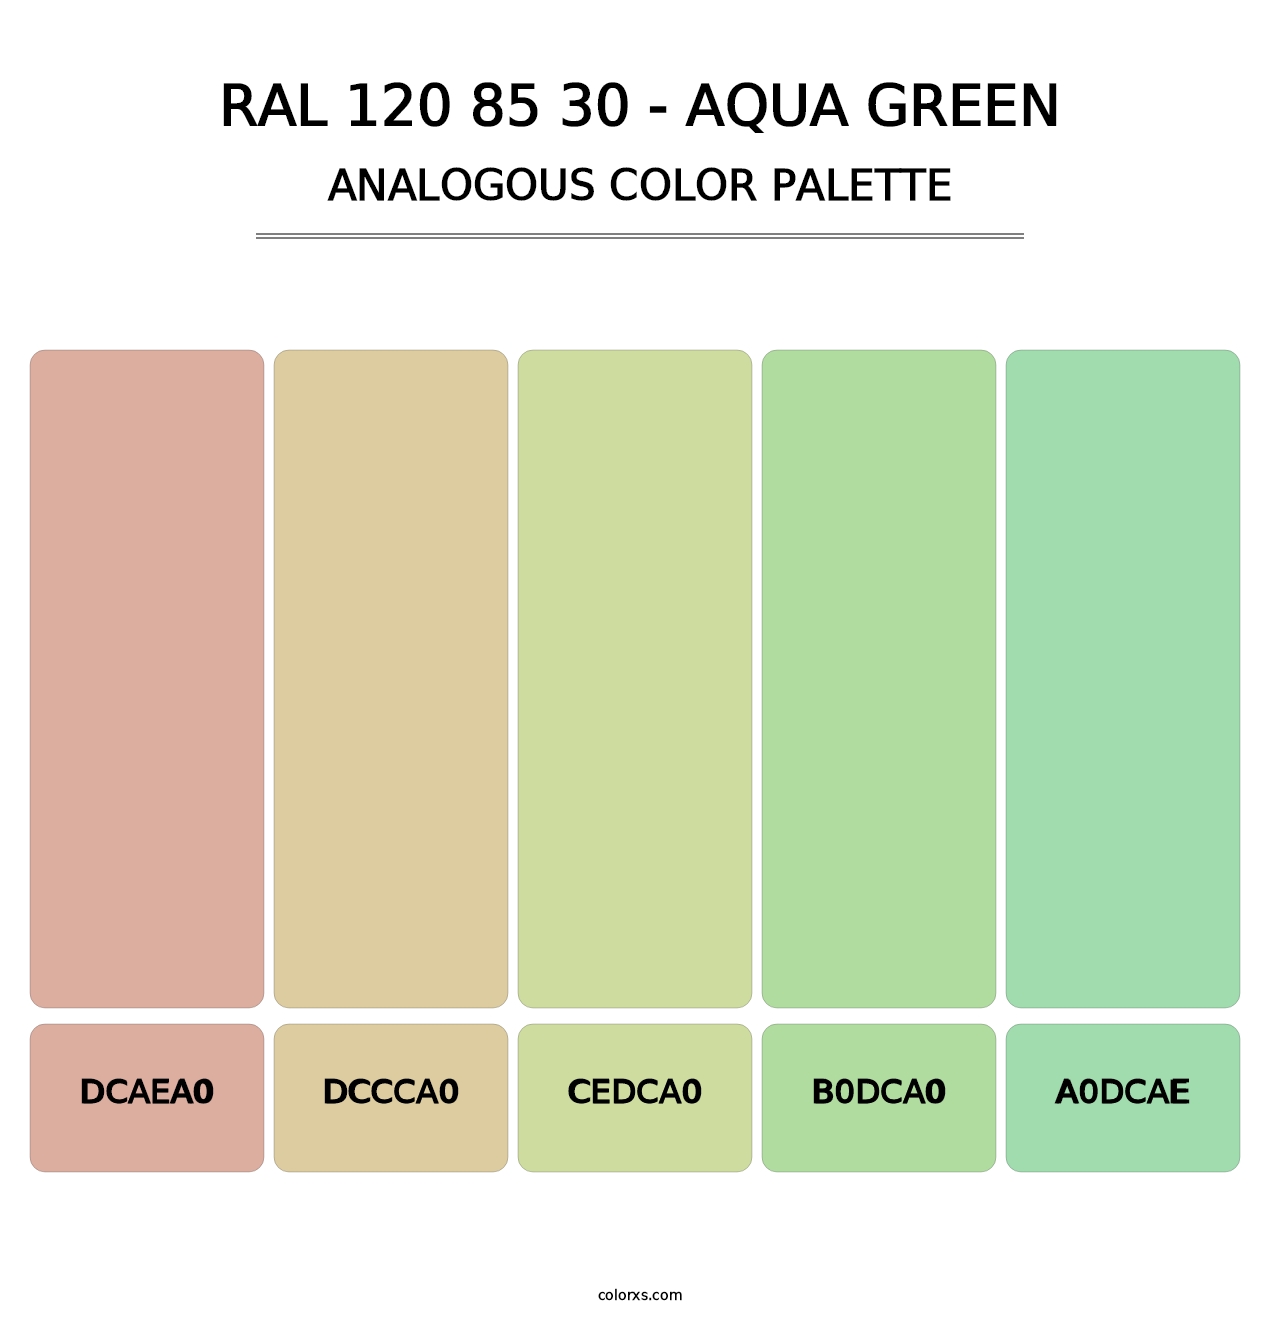 RAL 120 85 30 - Aqua Green - Analogous Color Palette